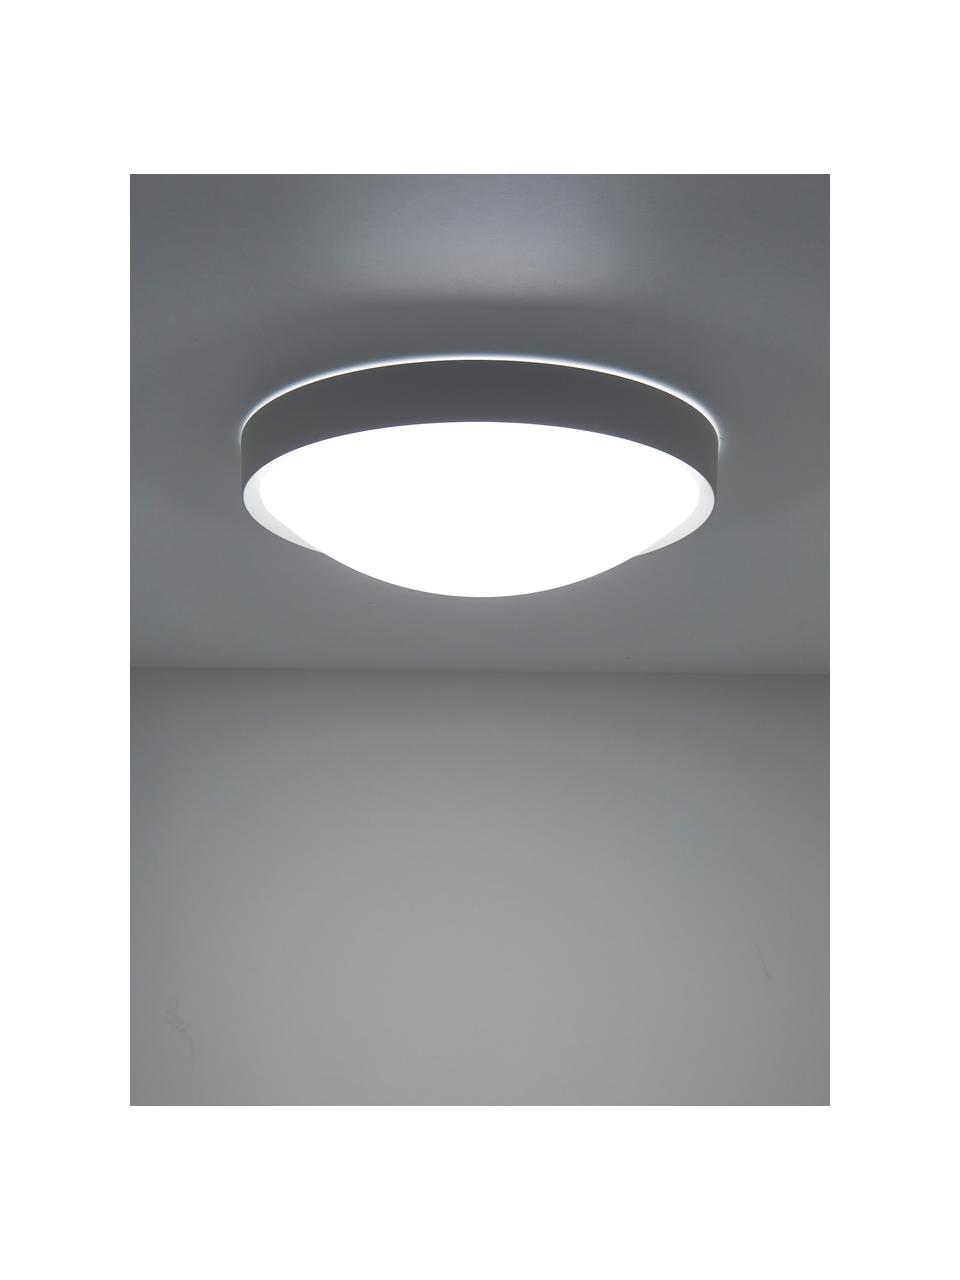 Petit plafonnier LED Altus, Blanc, Ø 30 x haut. 9 cm